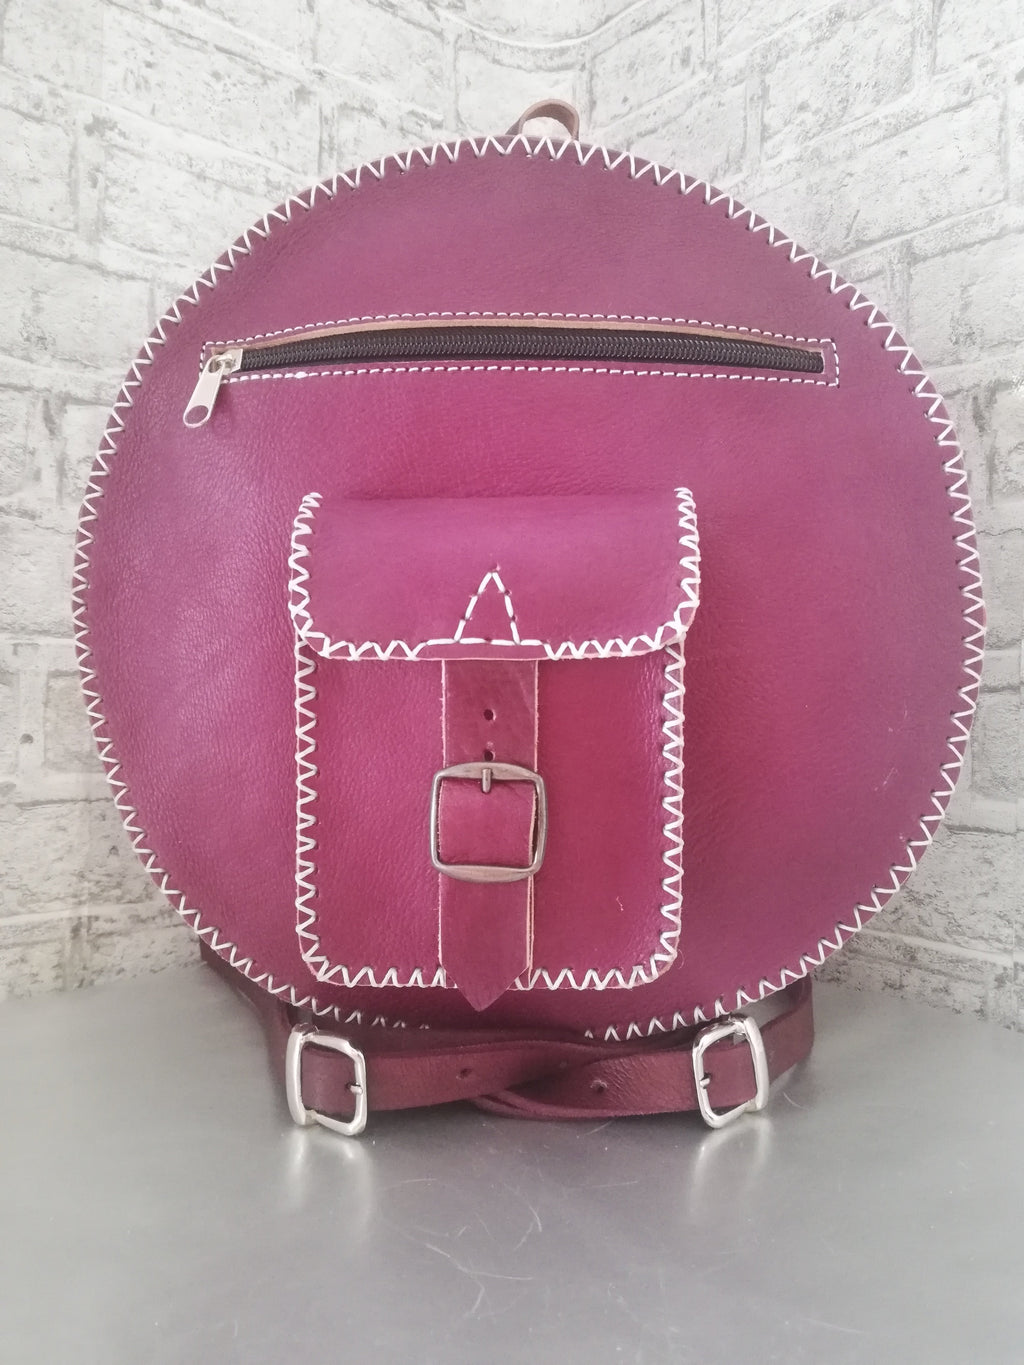 Backpacks Fashion Purse Women's New Leather Handbag Purple